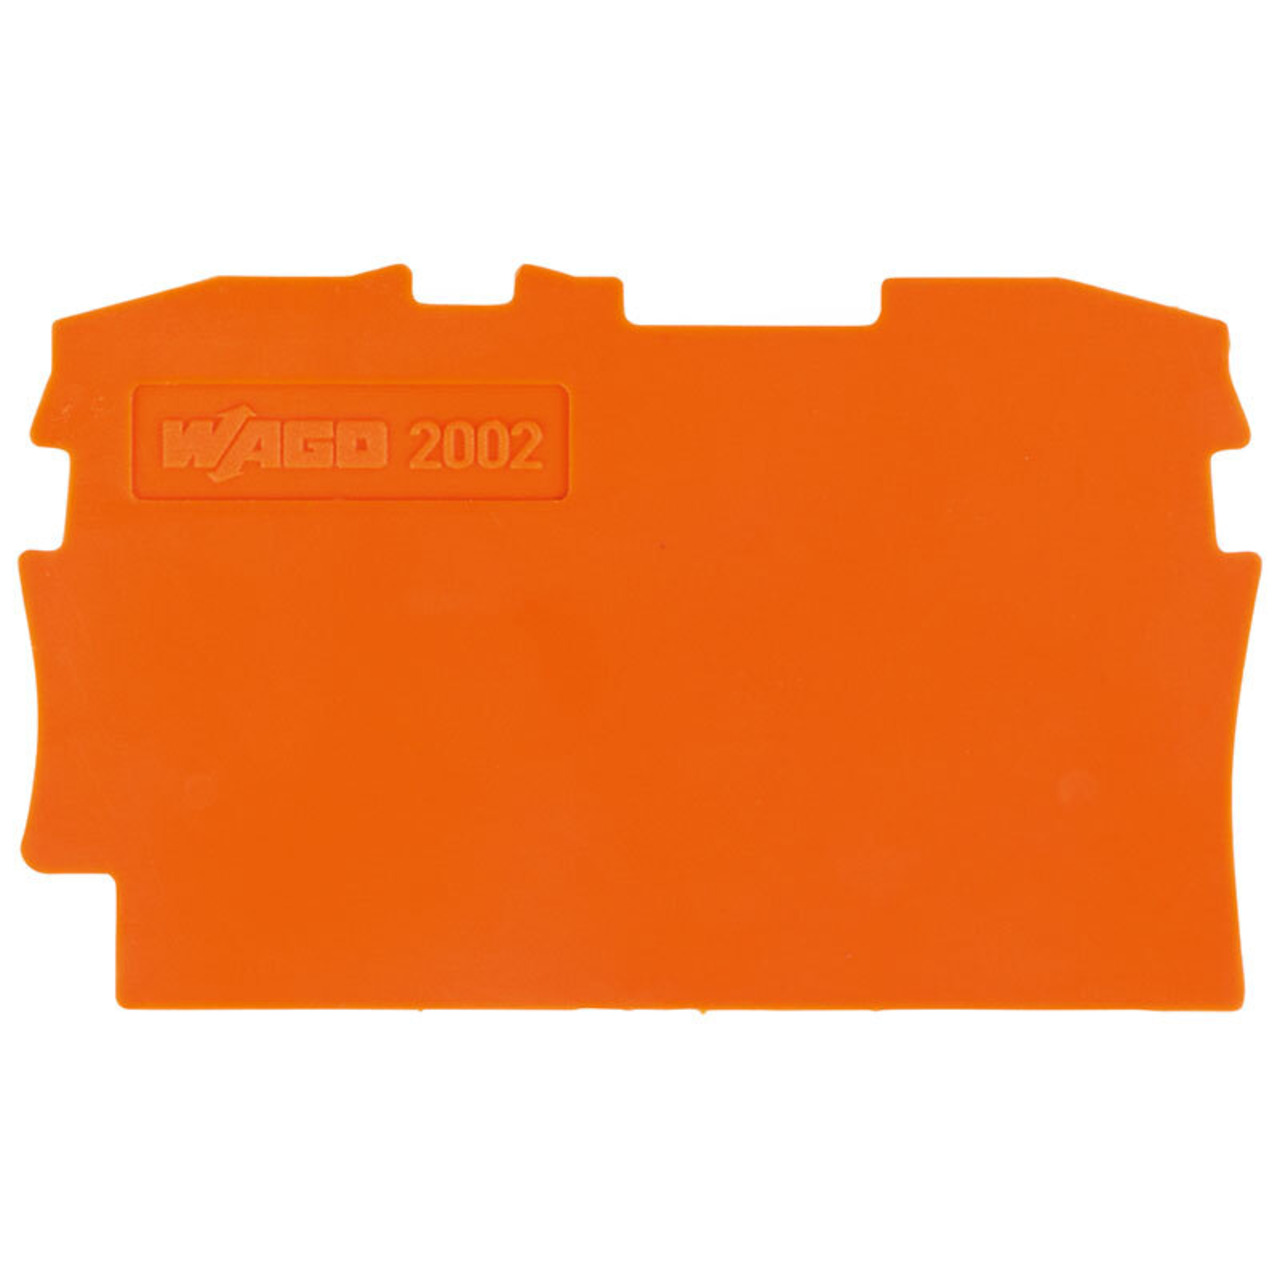 Wago Trennplate 2002-1294- orange- 2 mm dick